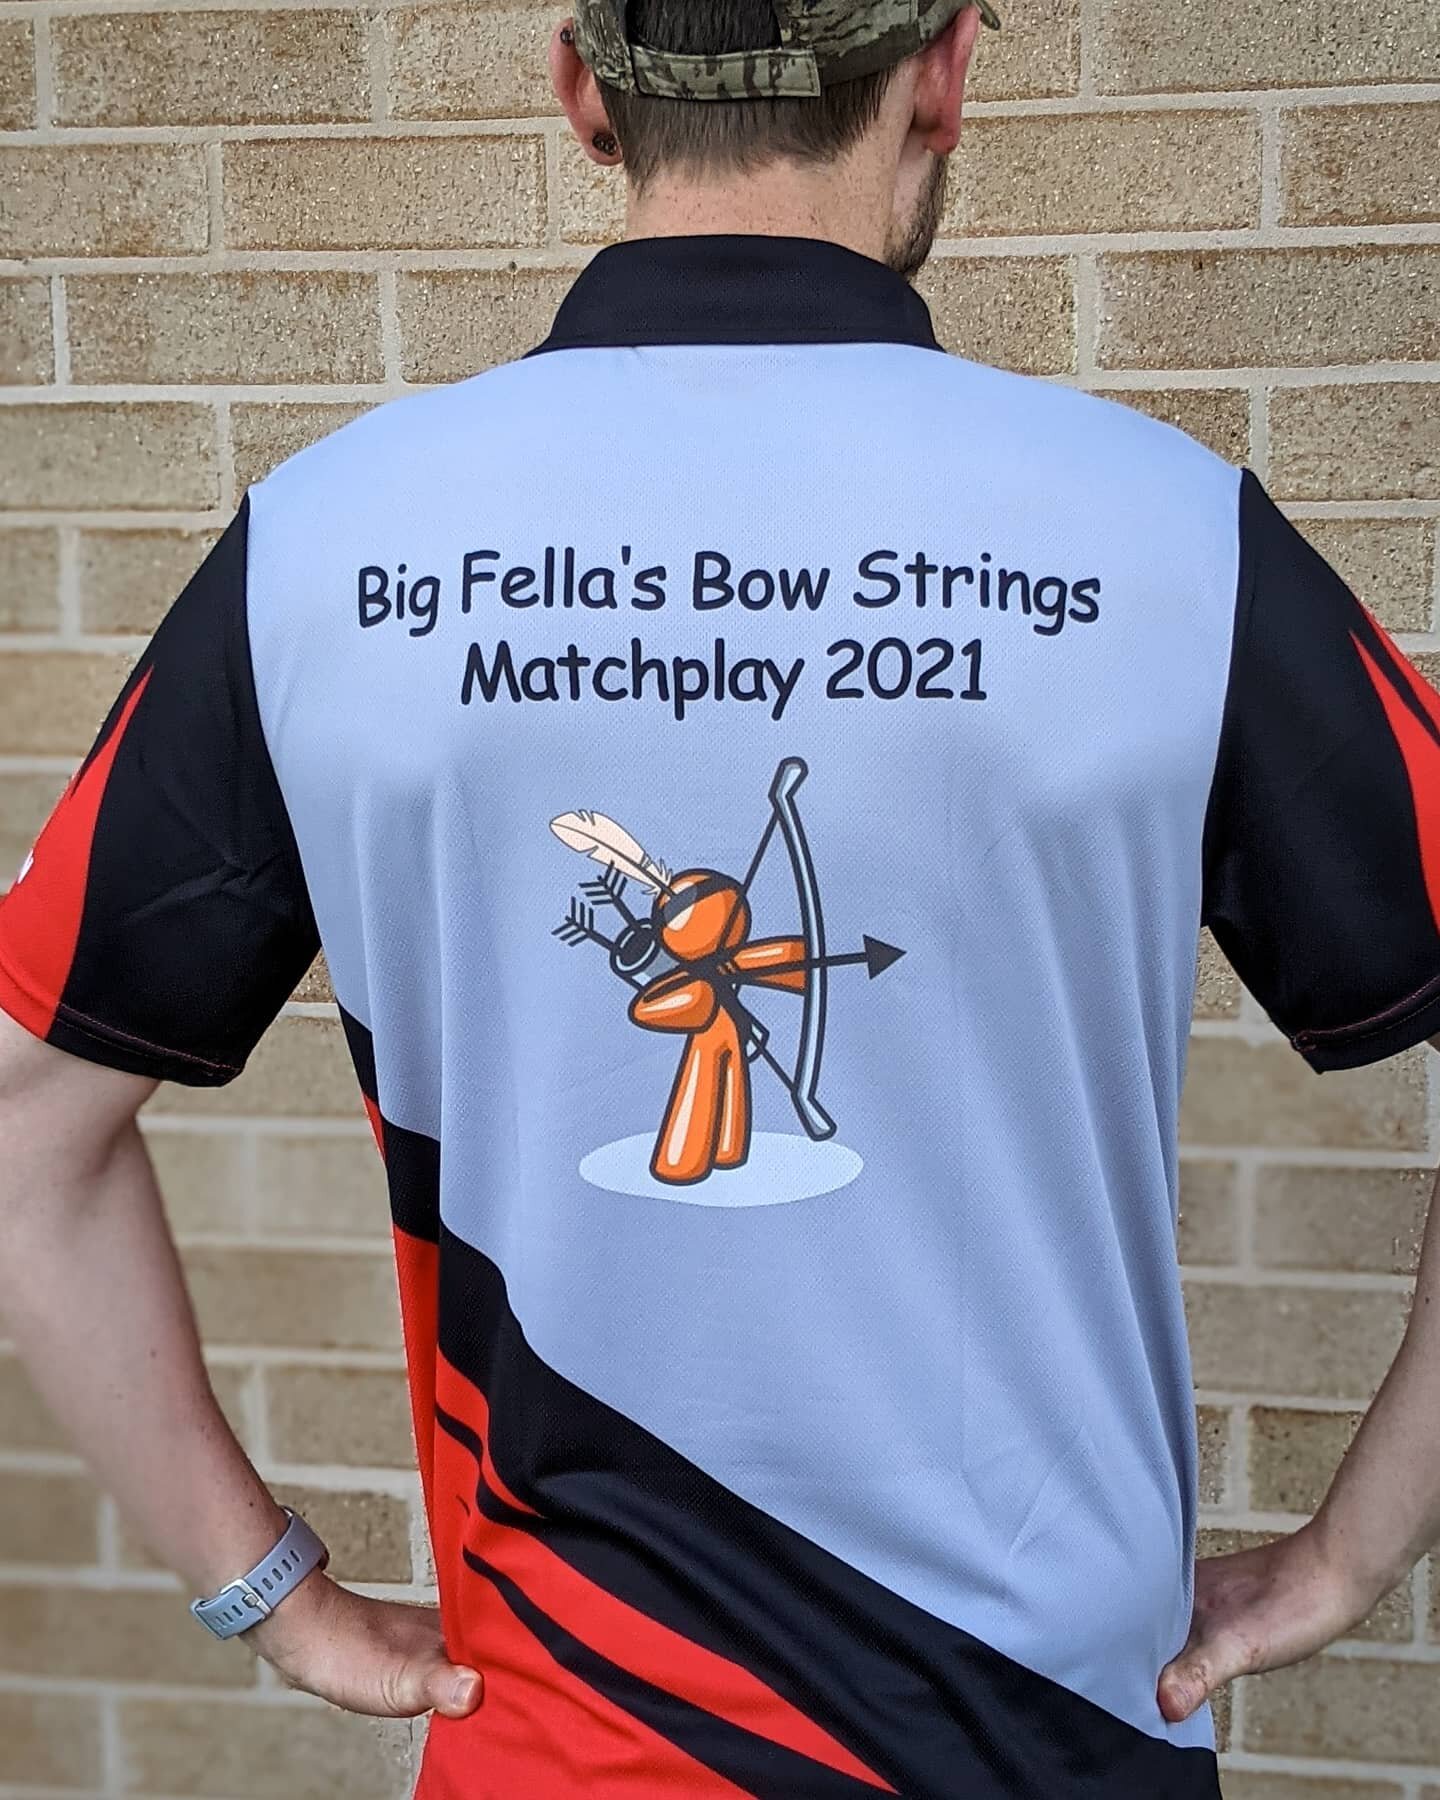 Big Fella's Bowstrings Matchplay 2021 👕
🏹🏹🏹
#archery #archer #archerylife #archerypractice #bow #bowandarrow #bowandarrows #compoundbow #recurvebow #club #sport #sports #sportsclub #archeryclub #arrow #arrows #3daaa #3darchery #3darcheryshoot #sh